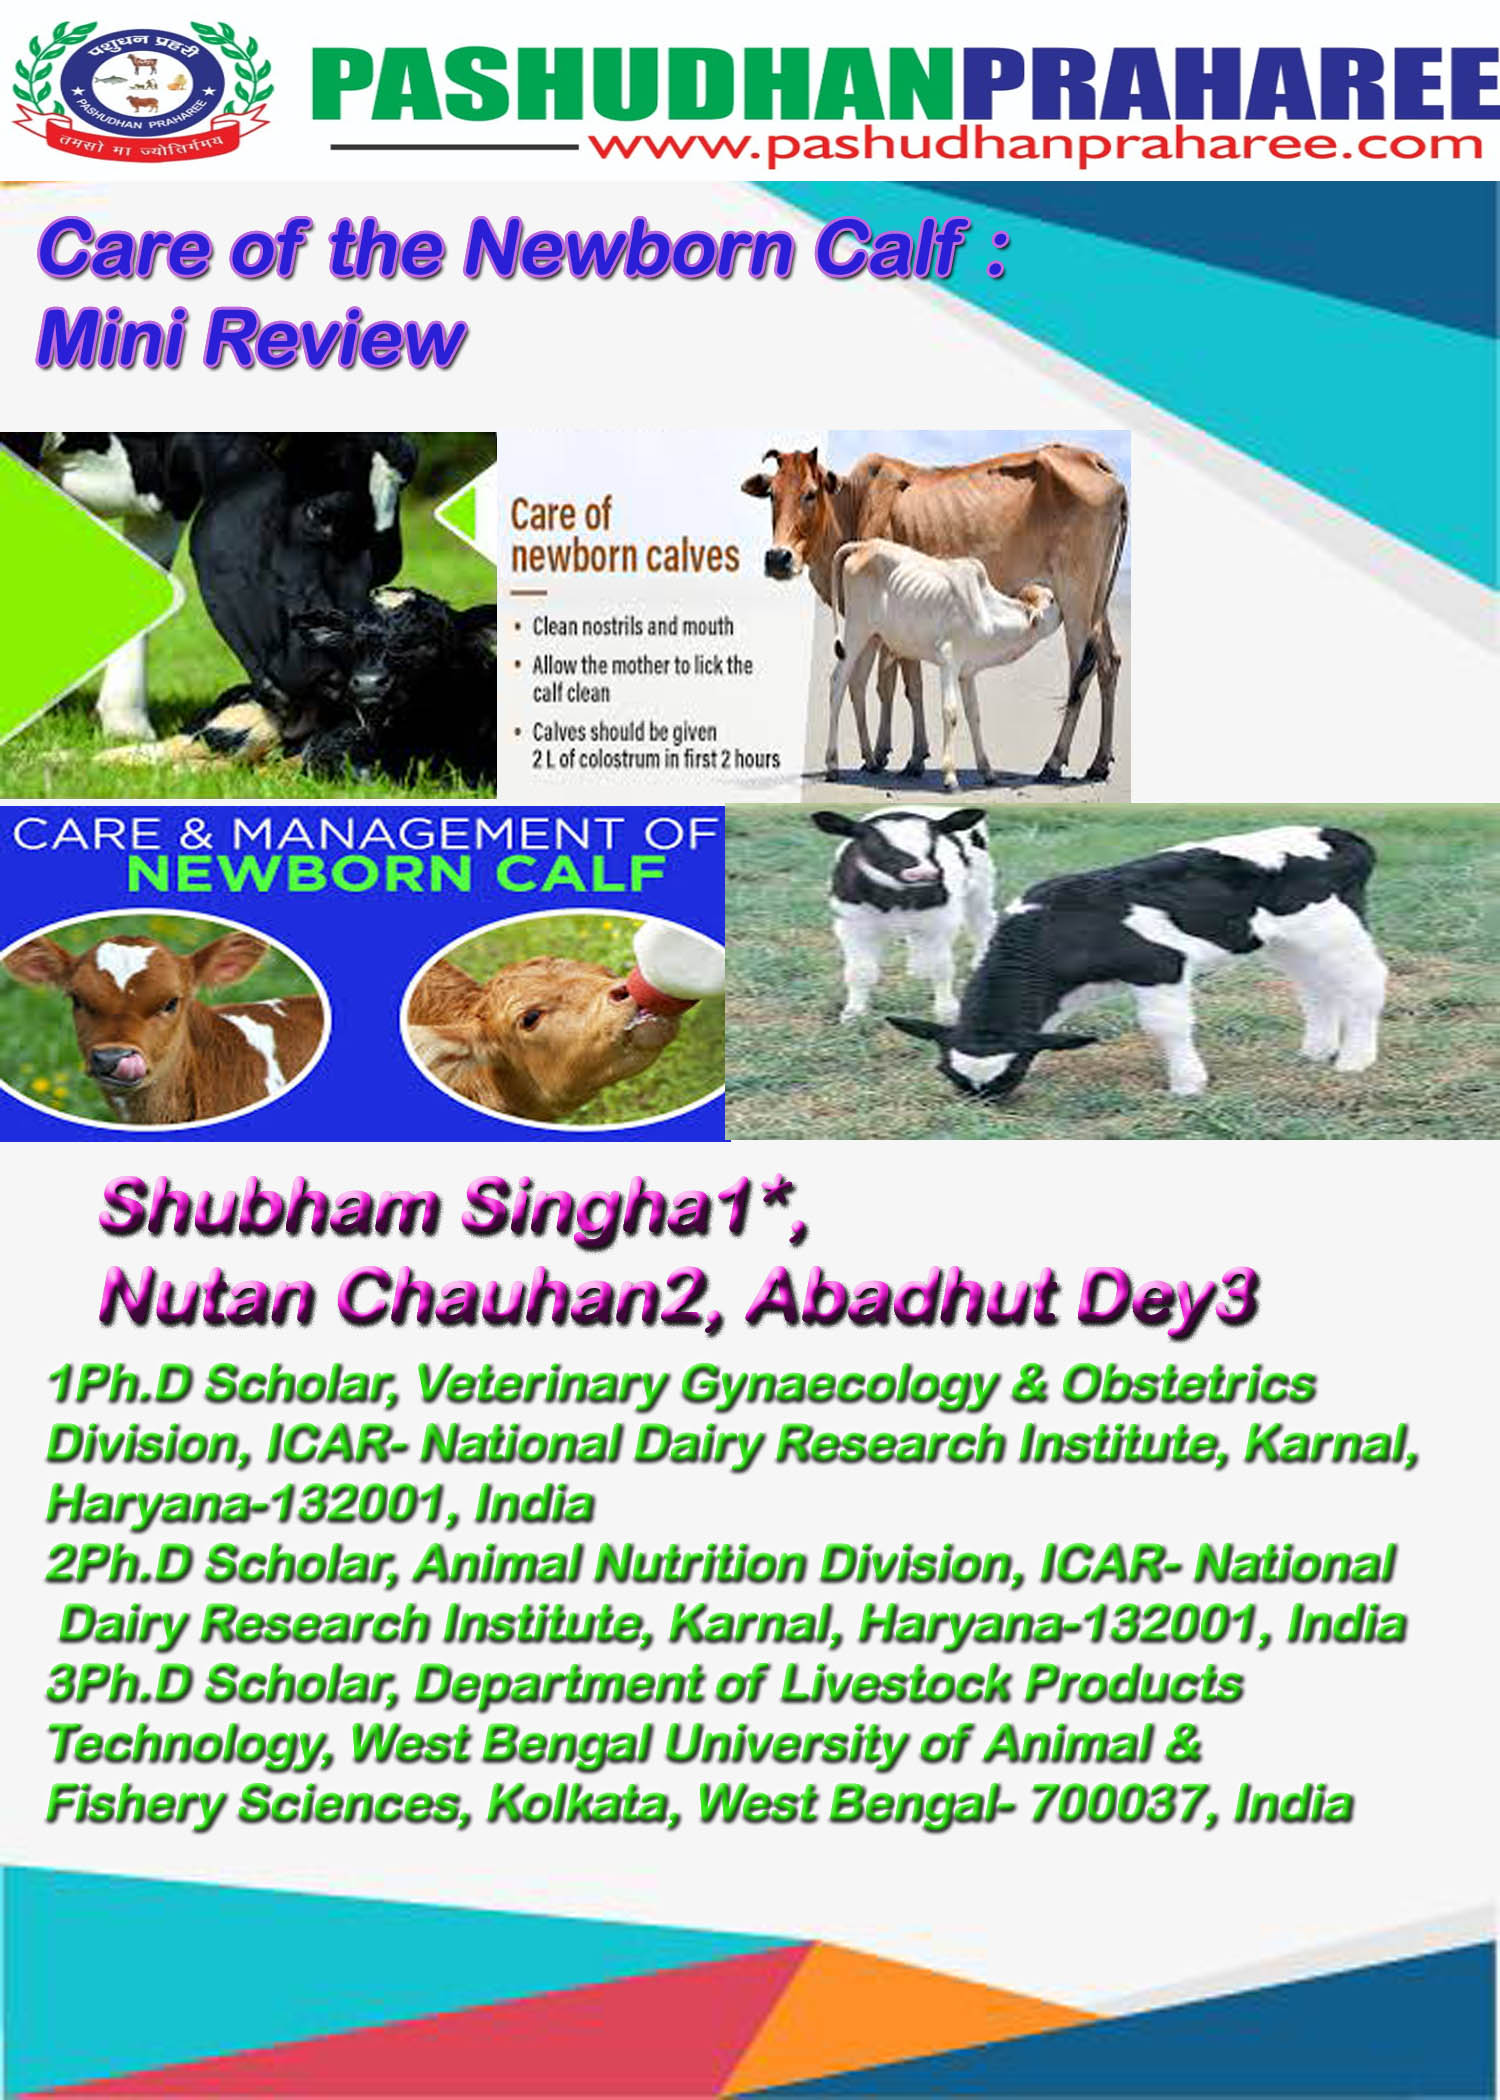 Care of the Newborn Calf : Mini Review – Pashudhan praharee